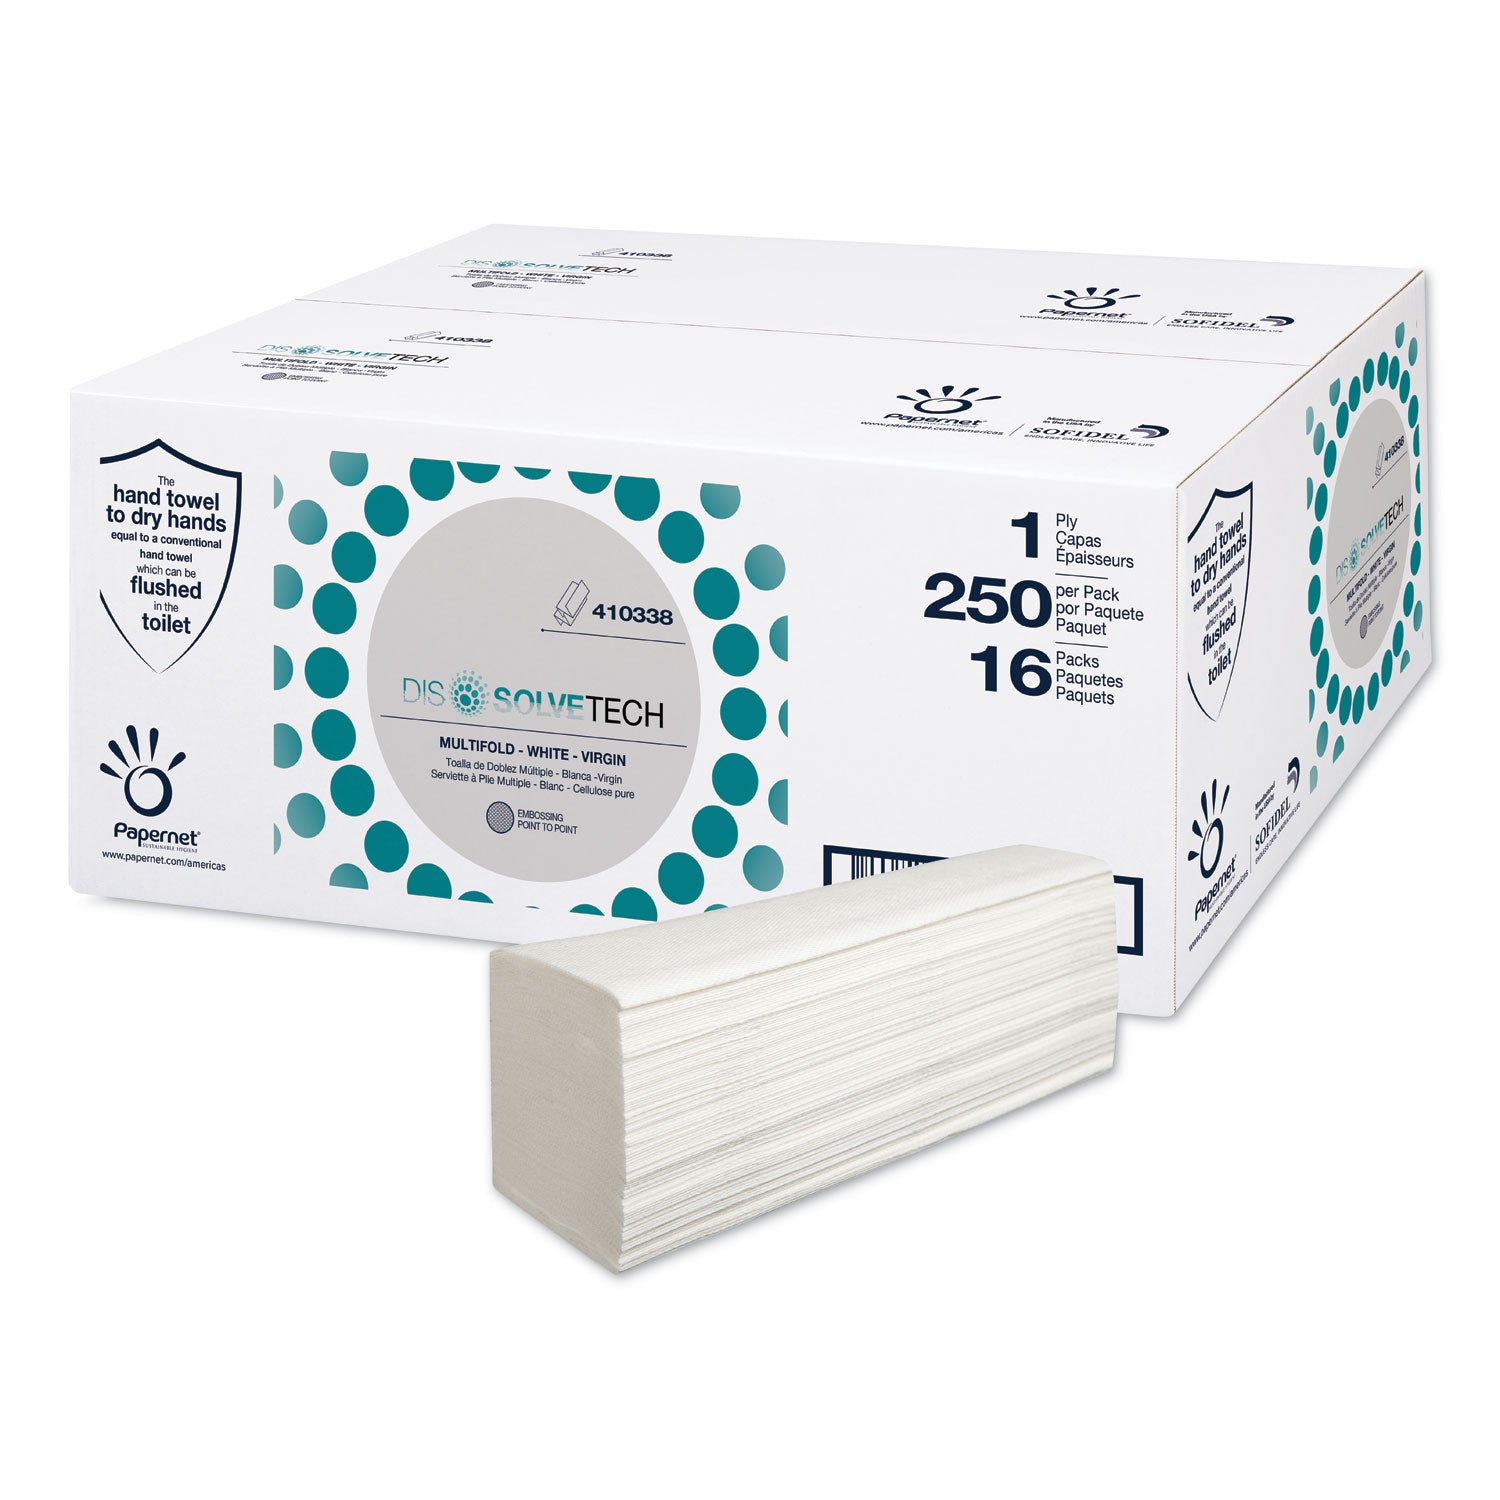 dissolvetech-paper-towel-1-ply-949-x-811-white-250-pack-16-packs-carton_sod410338 - 1